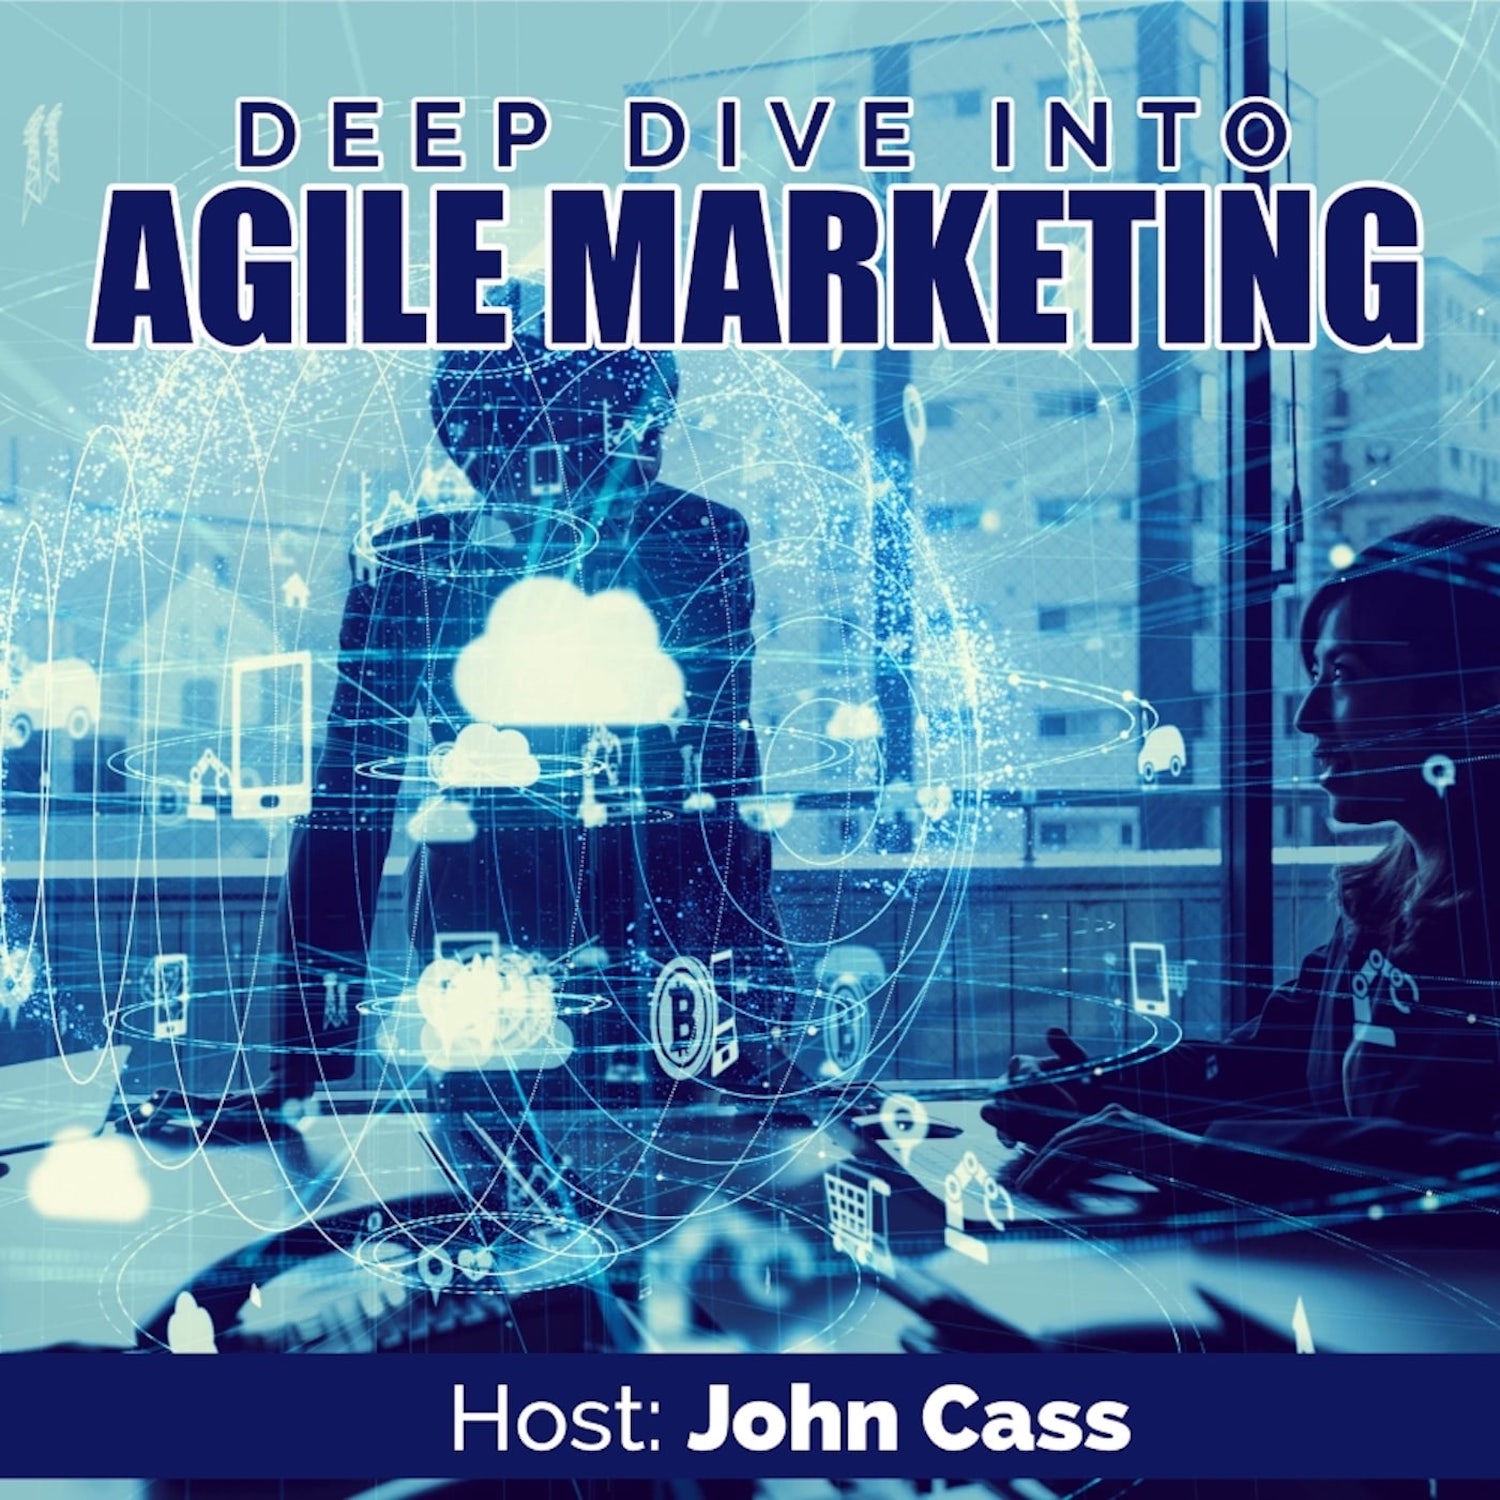 Deep Dive into Agile Marketing with John Cass